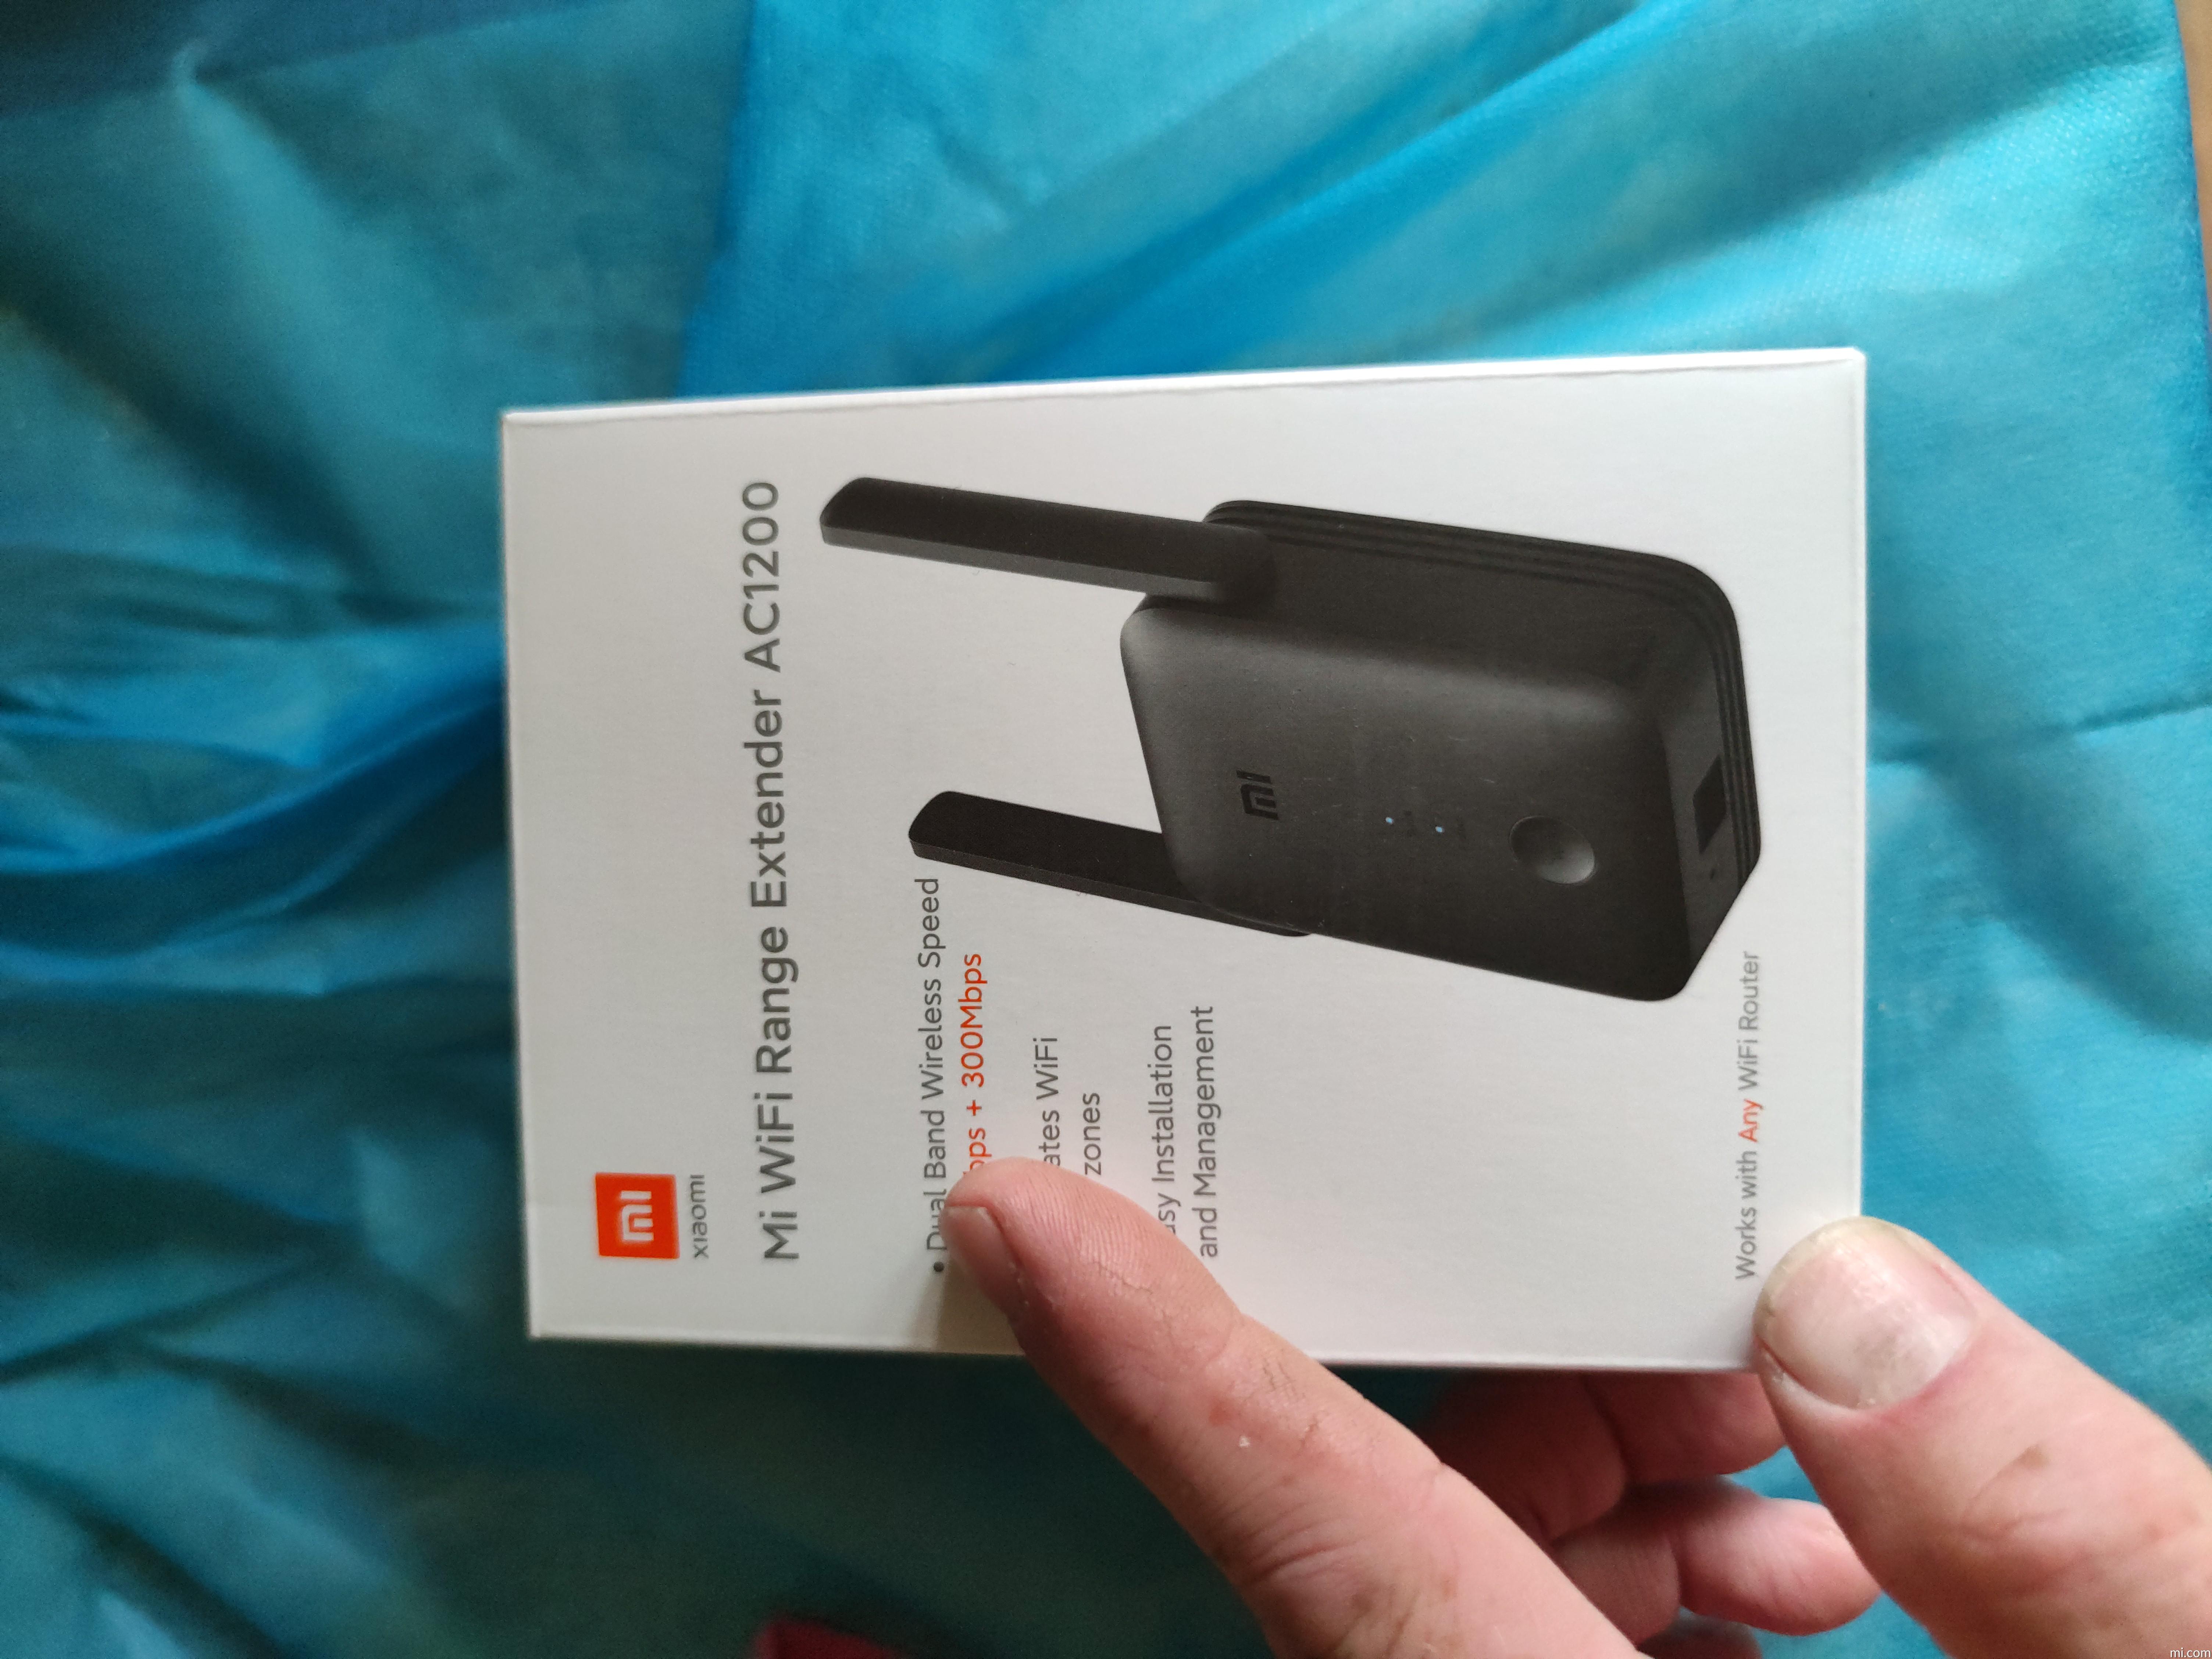 Xiaomi Mi RA75 AC1200 WiFi Range Extender WiFi Booster Dual Band